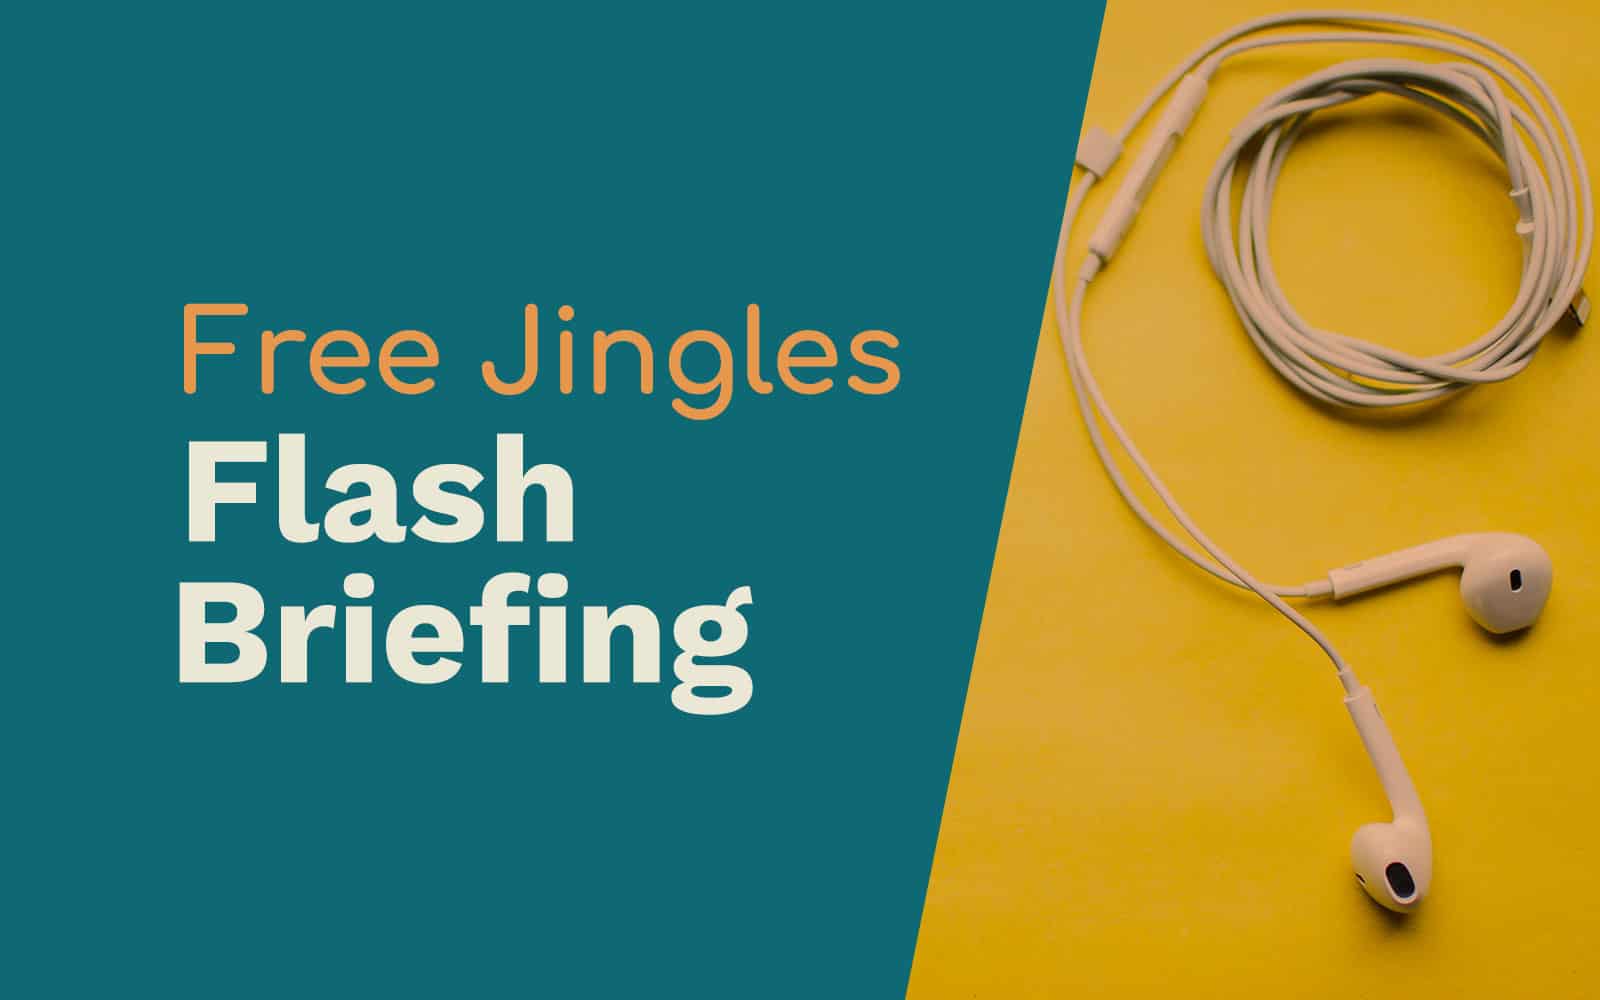 Free Jingles for Your Flash Briefings Free Jingles flash briefings Music Radio Creative